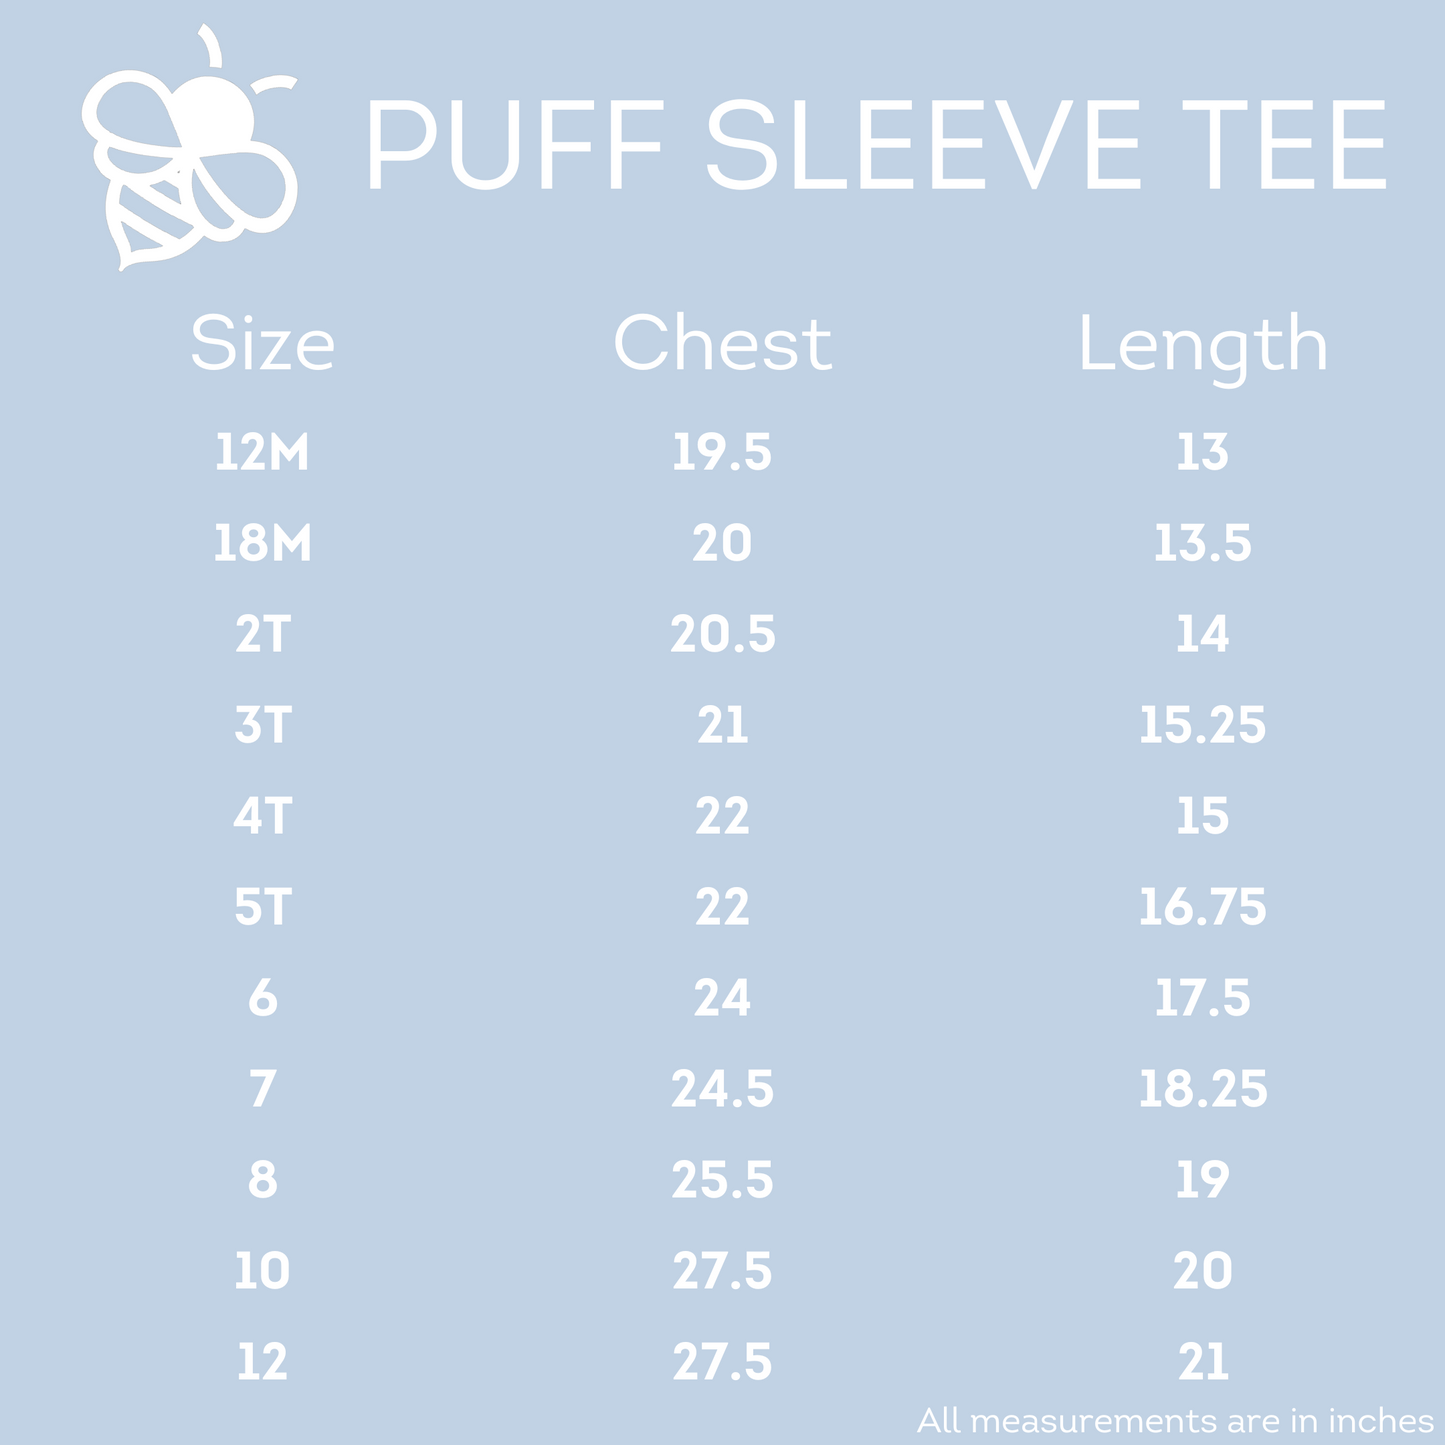 Puff Sleeve Tee - 1st Grade Social Club